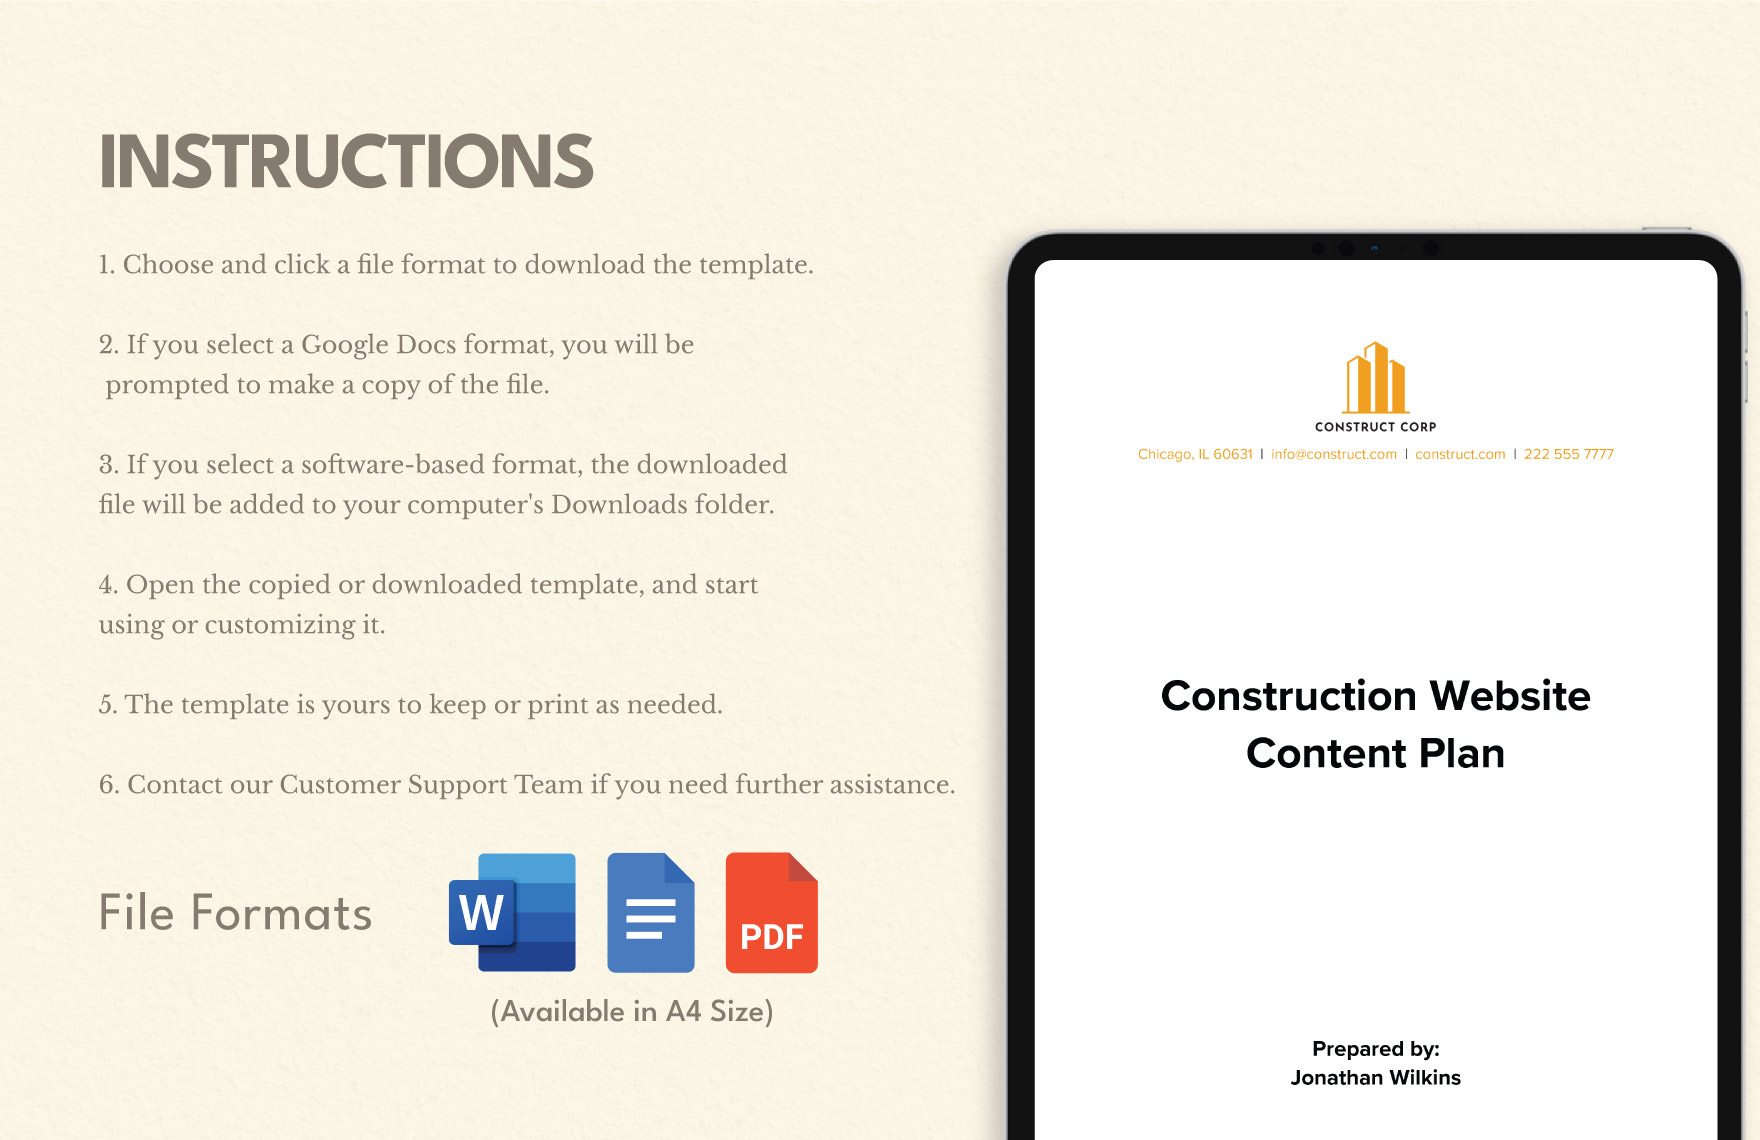 Construction Website Content Plan Template